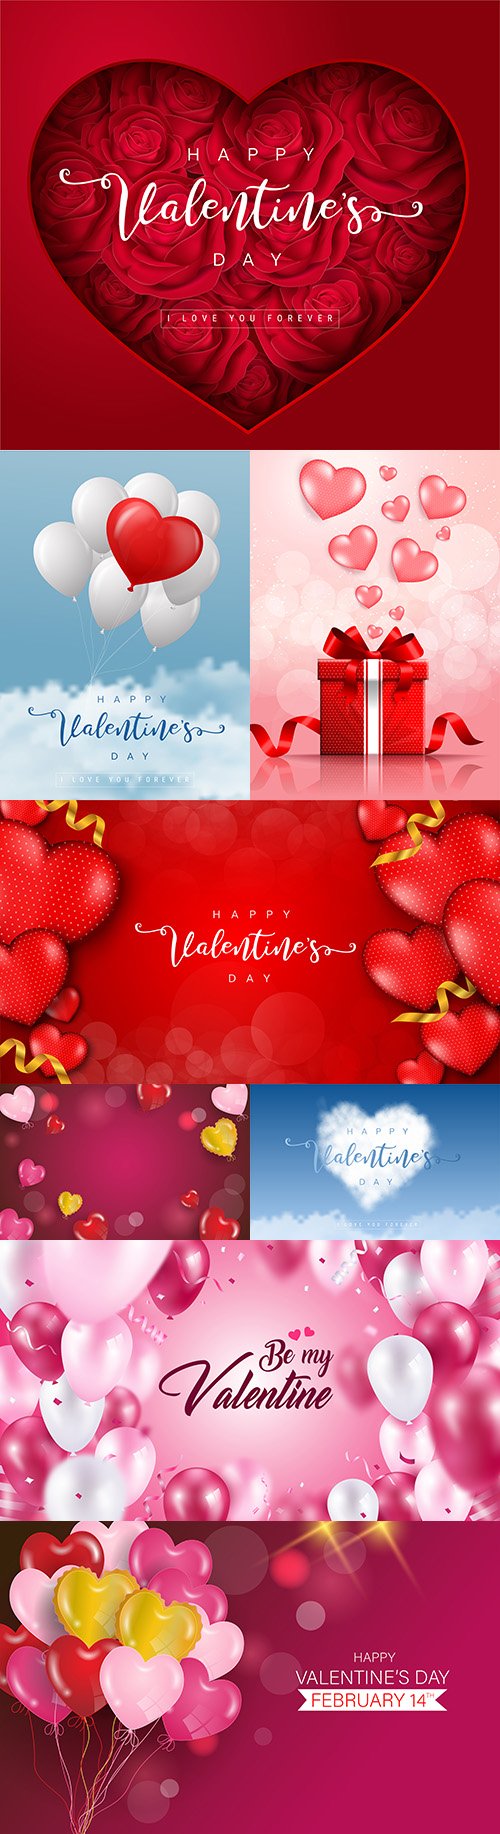 Valentine's Day romantic elements decorative illustrations 14